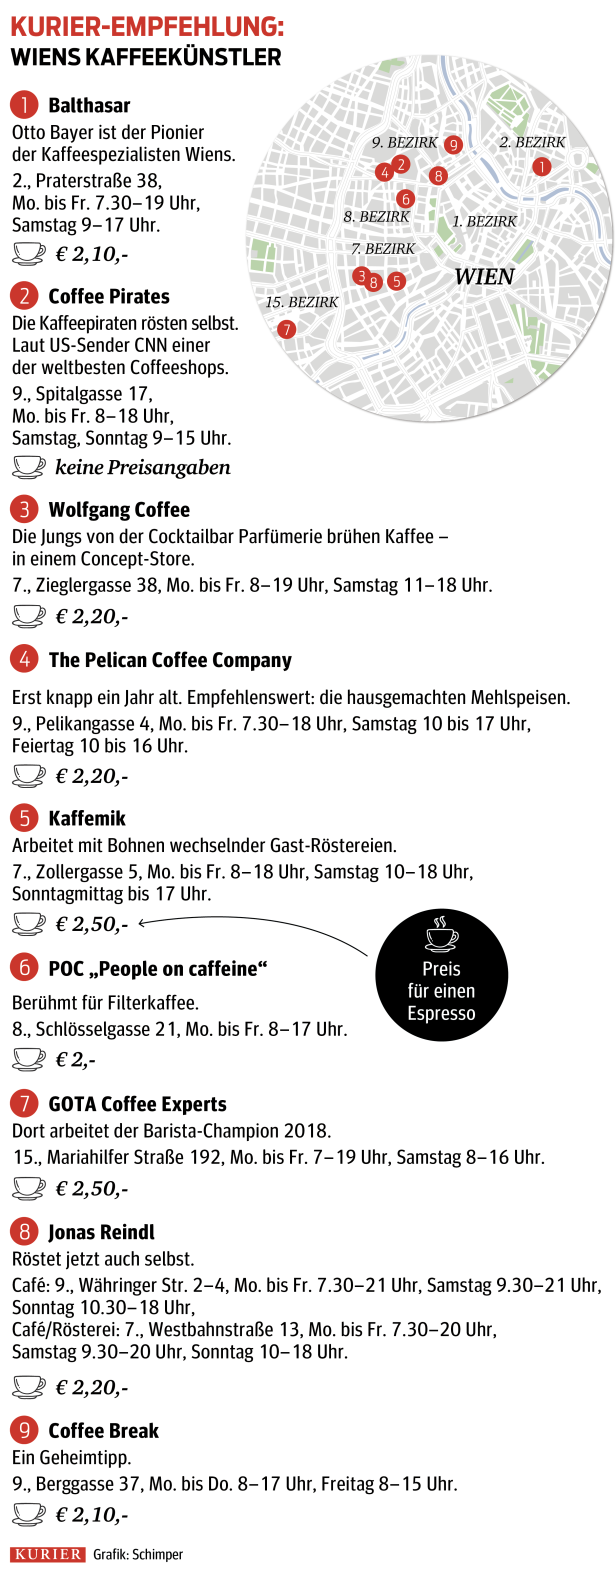 Wiens Kaffeekünstler laufen Traditionsbetrieben den Rang ab